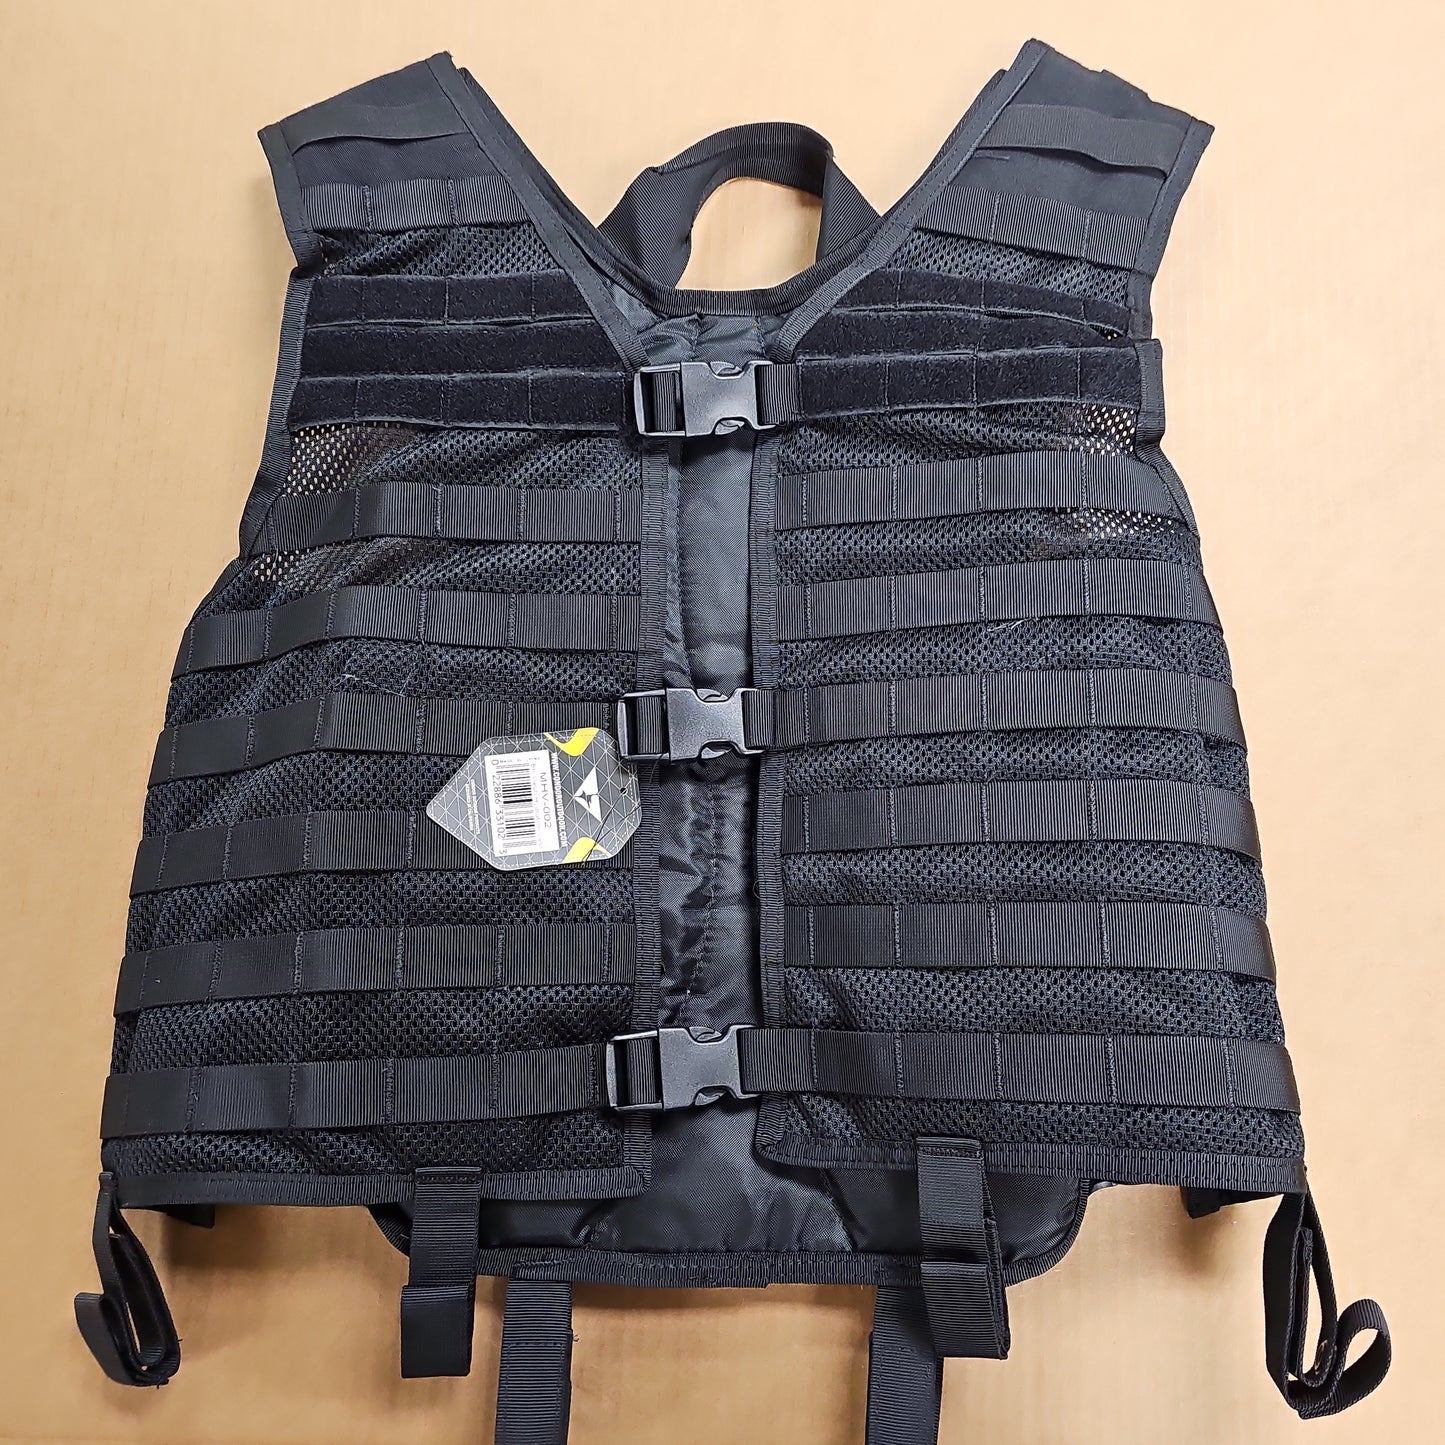 Mesh Hydration Vest: Black, One Size MHV-002